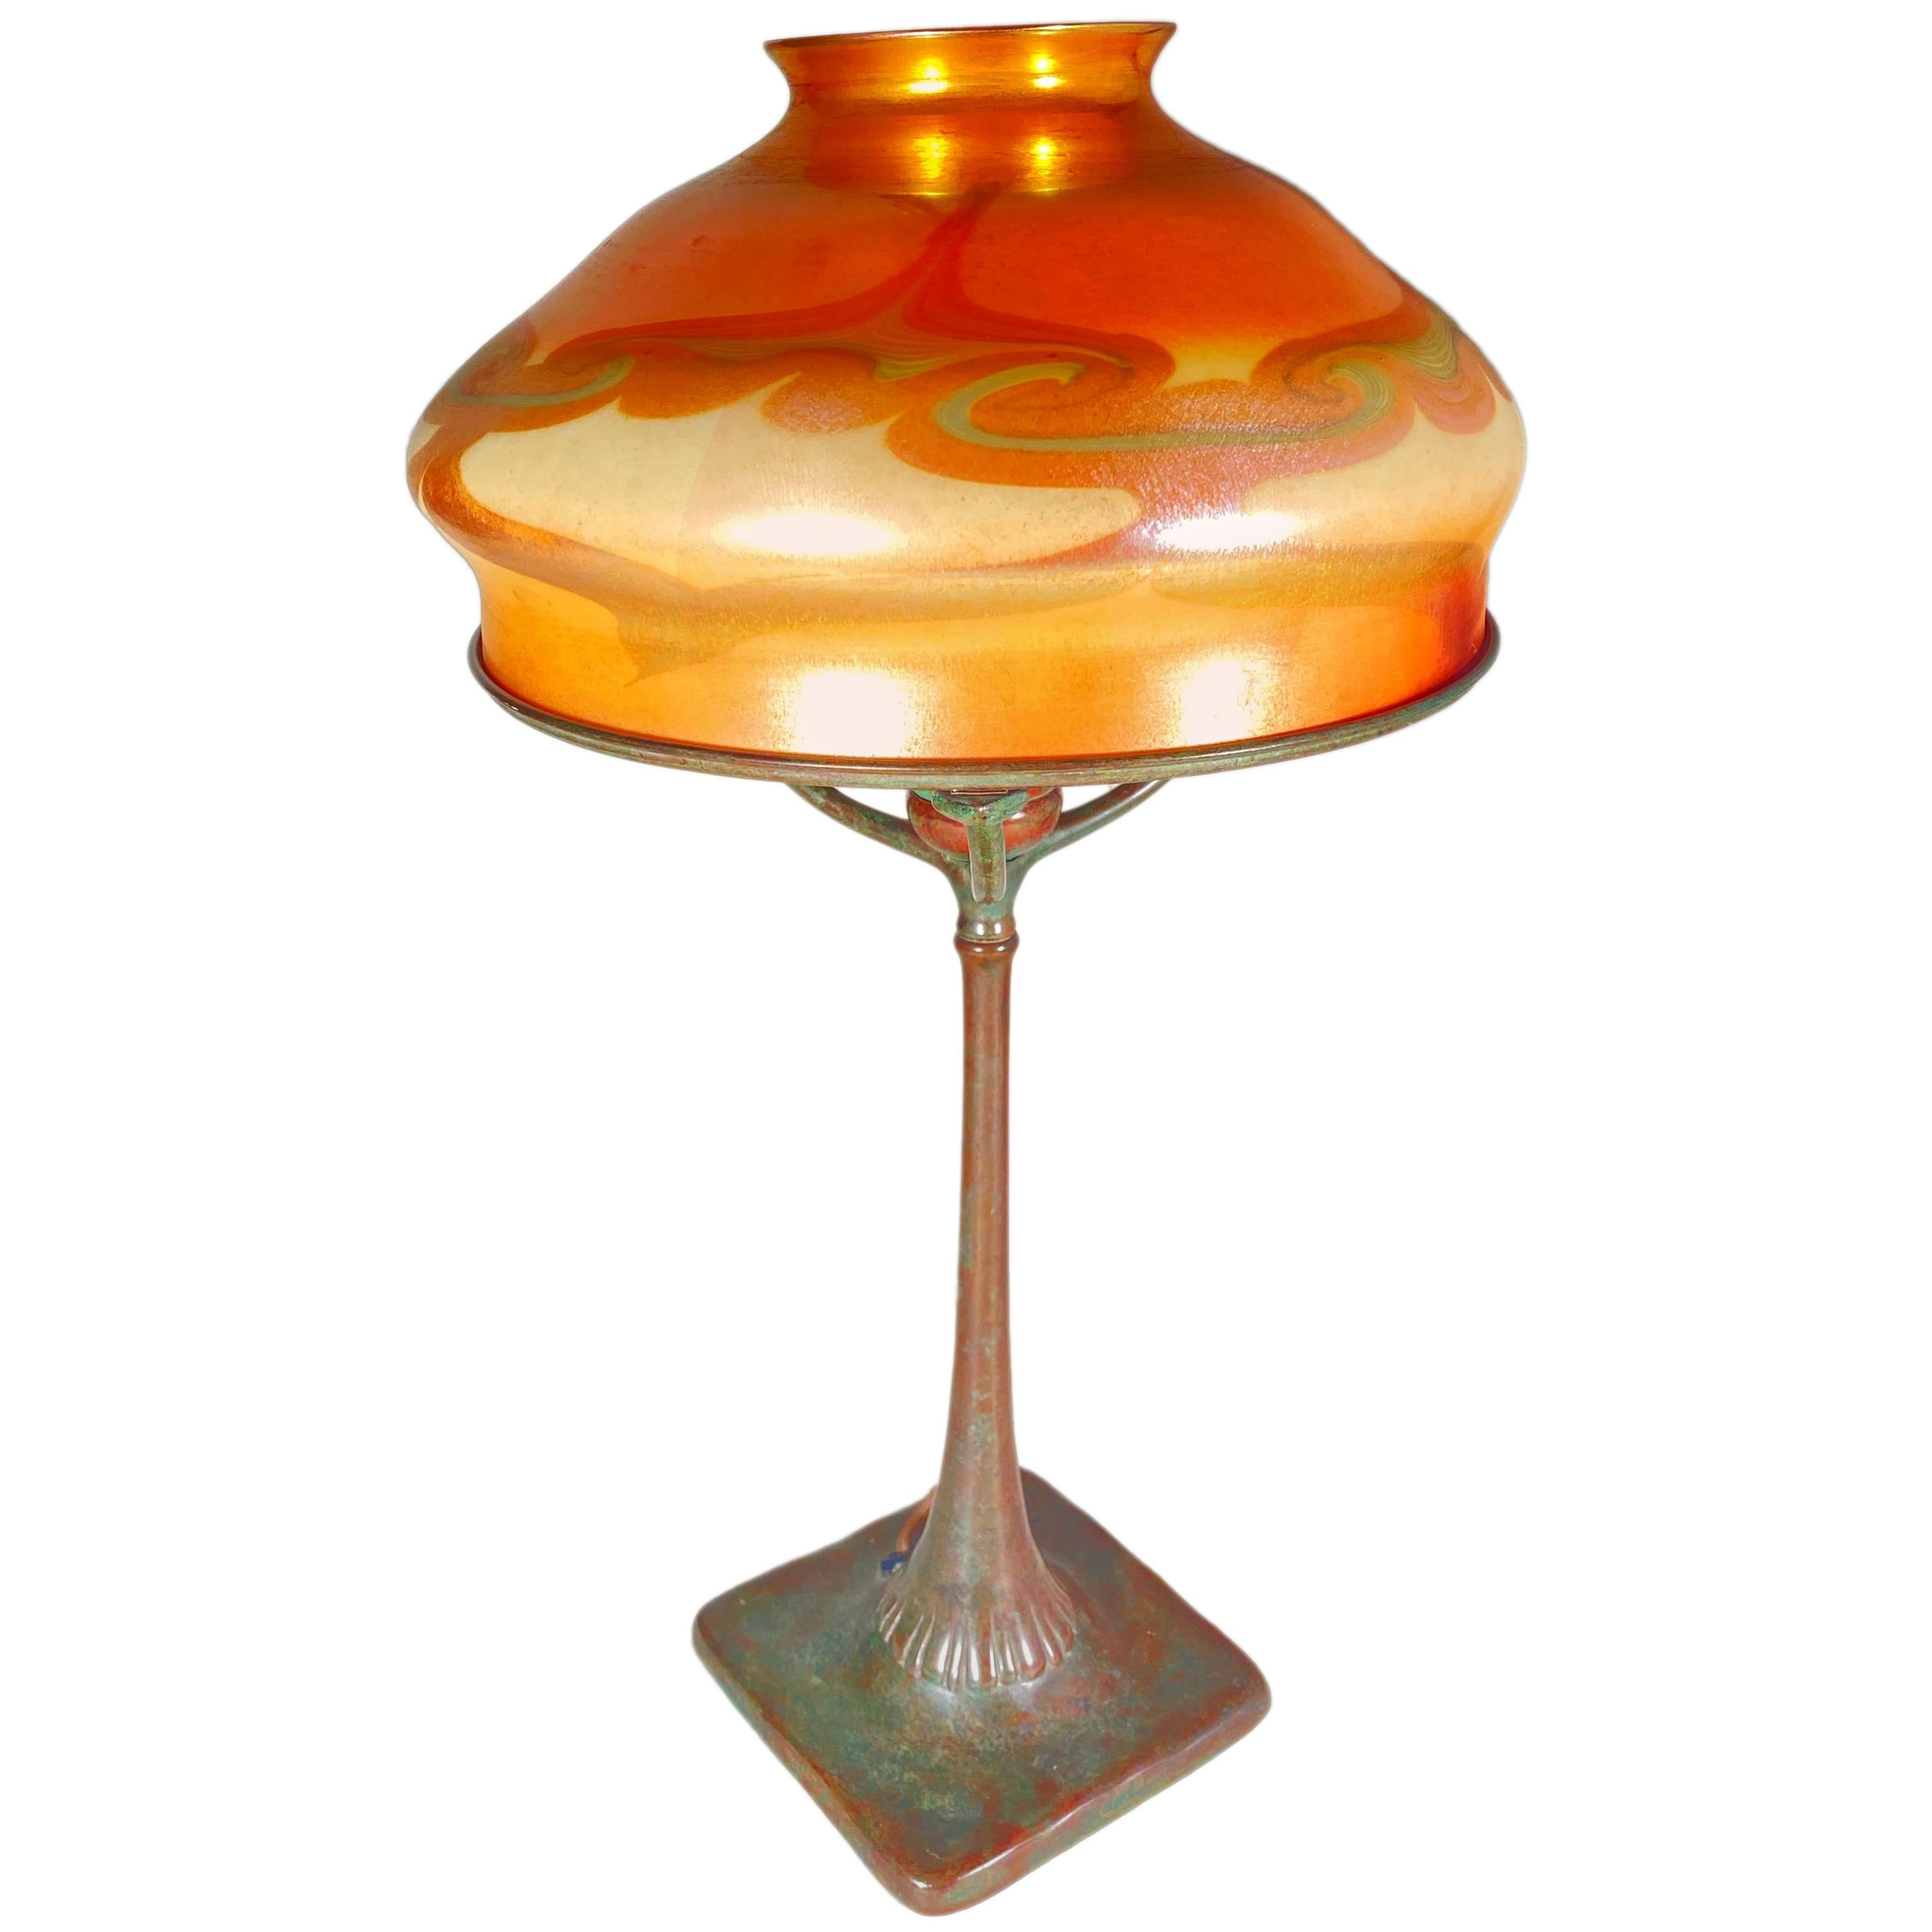 Tiffany Favrile and Bronze Art Nouveau Desk Lamp by, Tiffany Studios